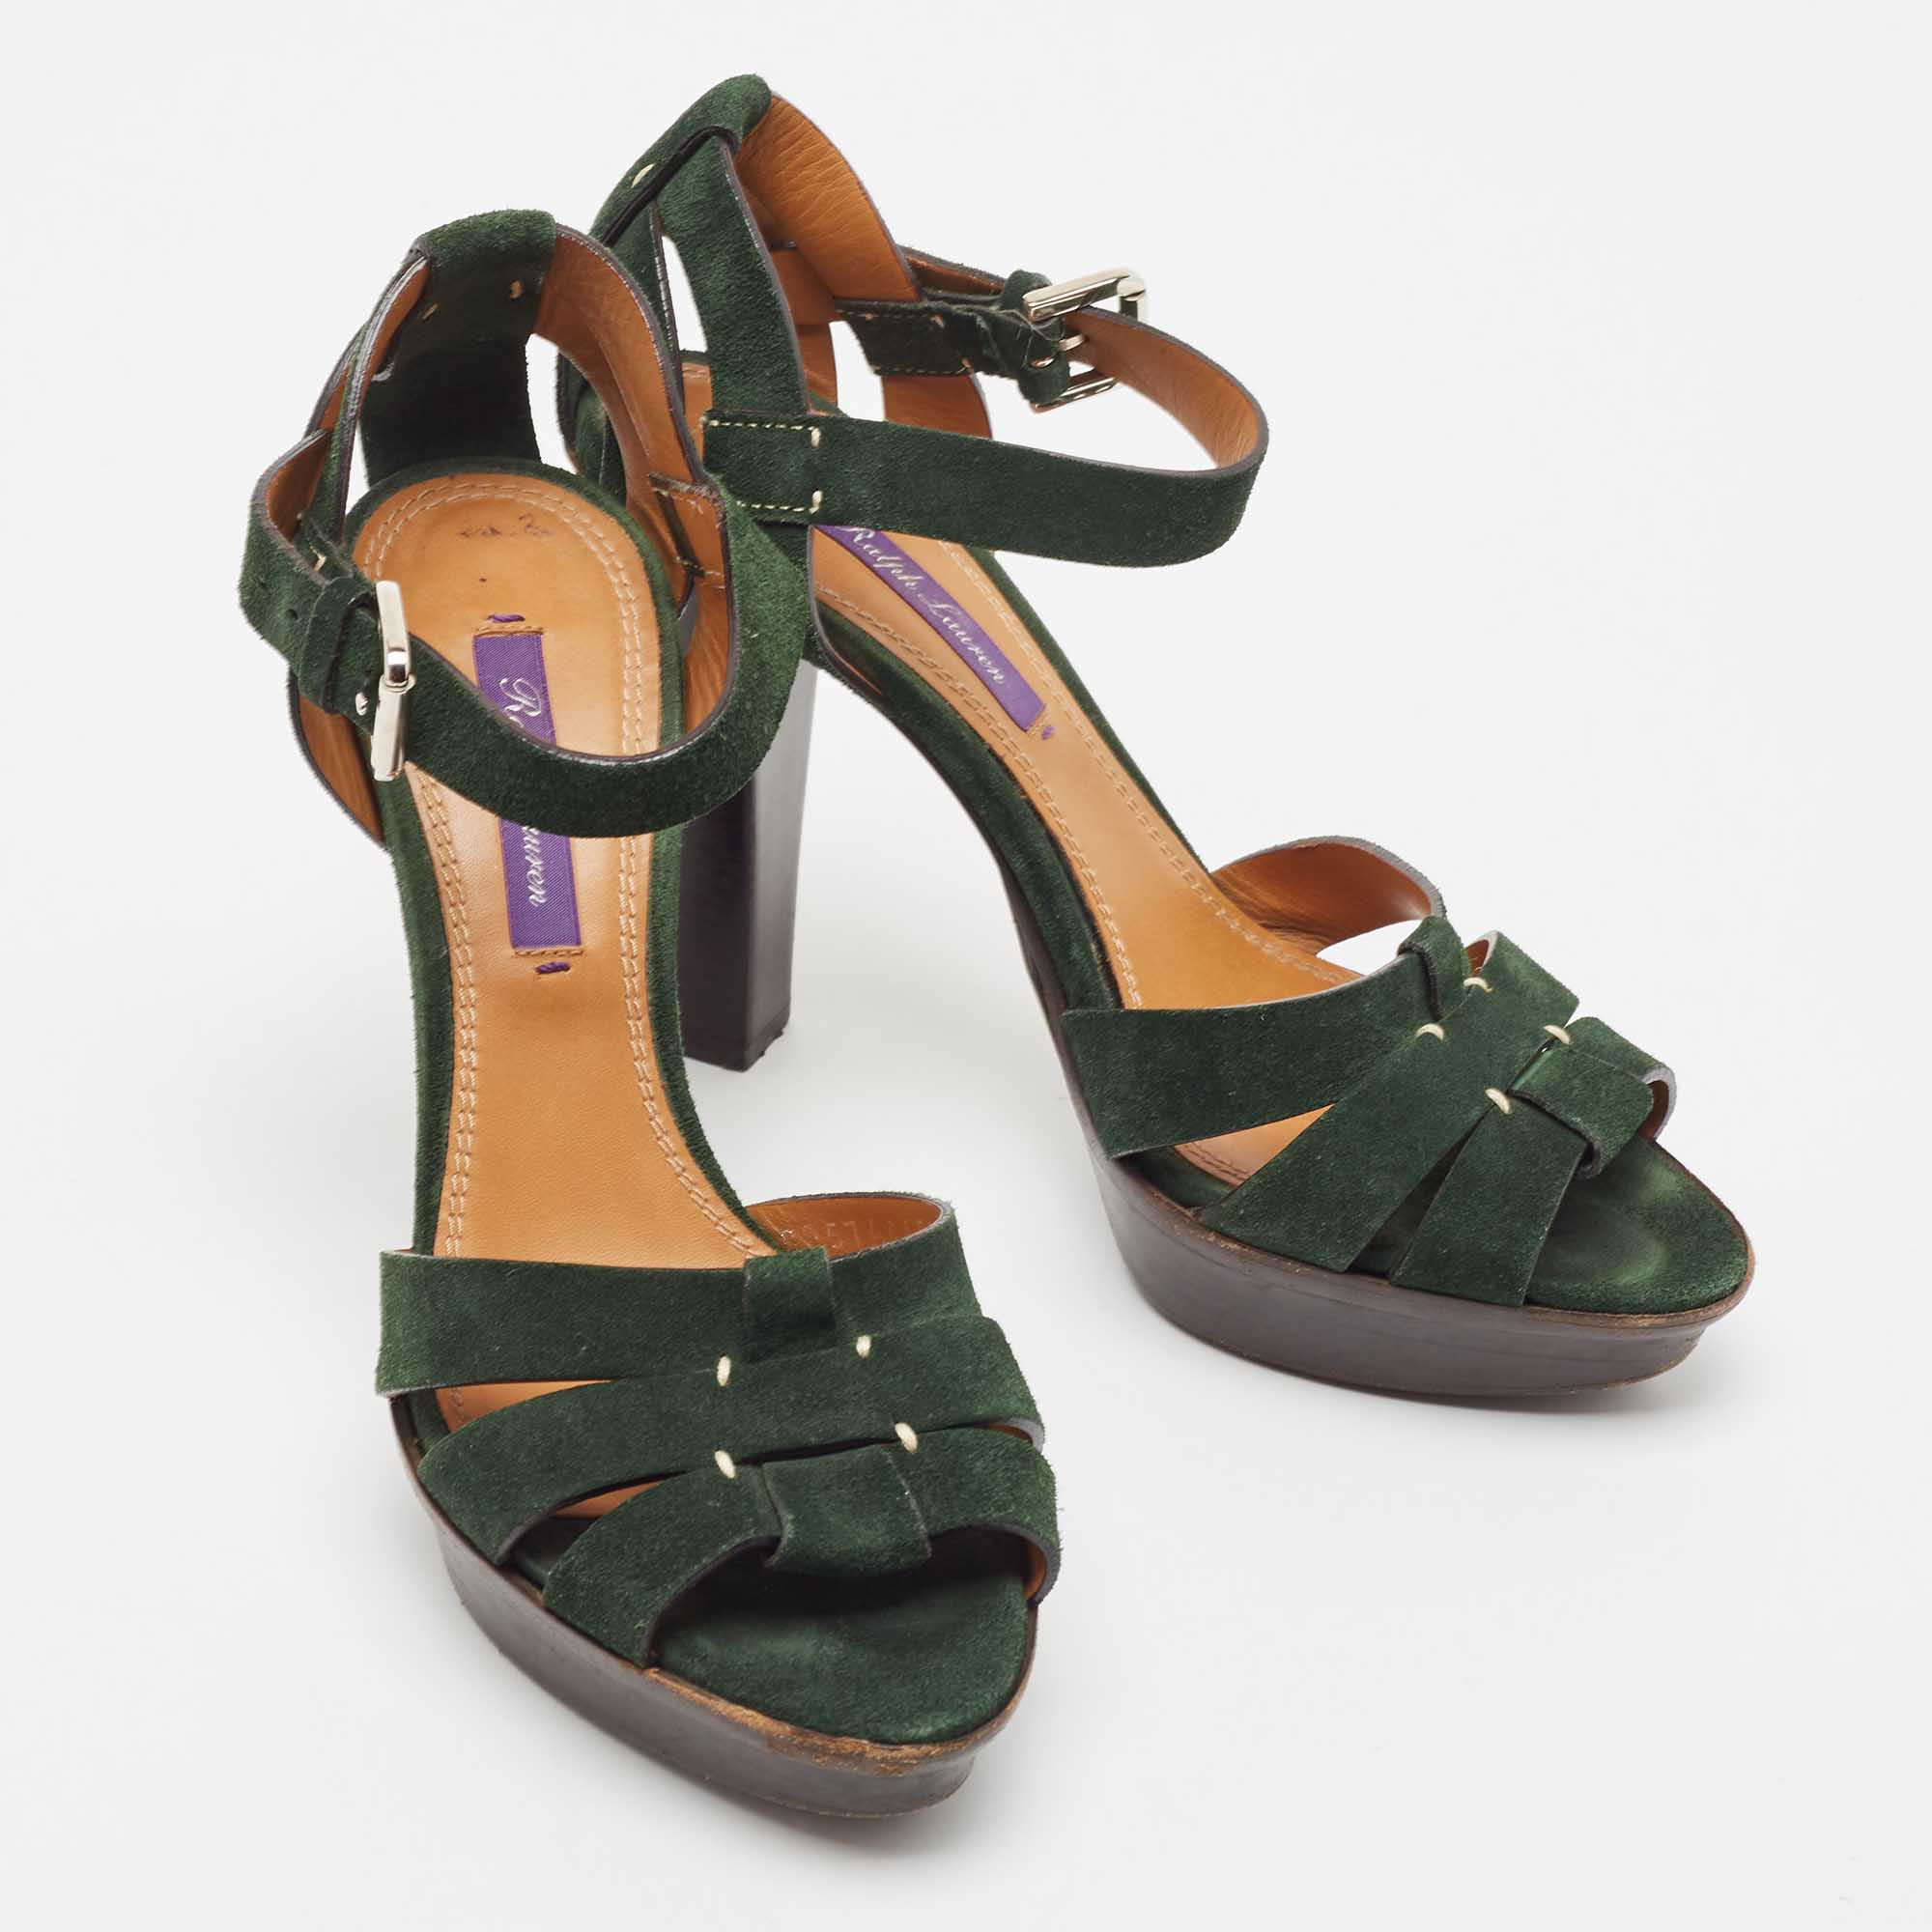 Ralph Lauren Green Suede Ankle Strap Sandals Size 37.5